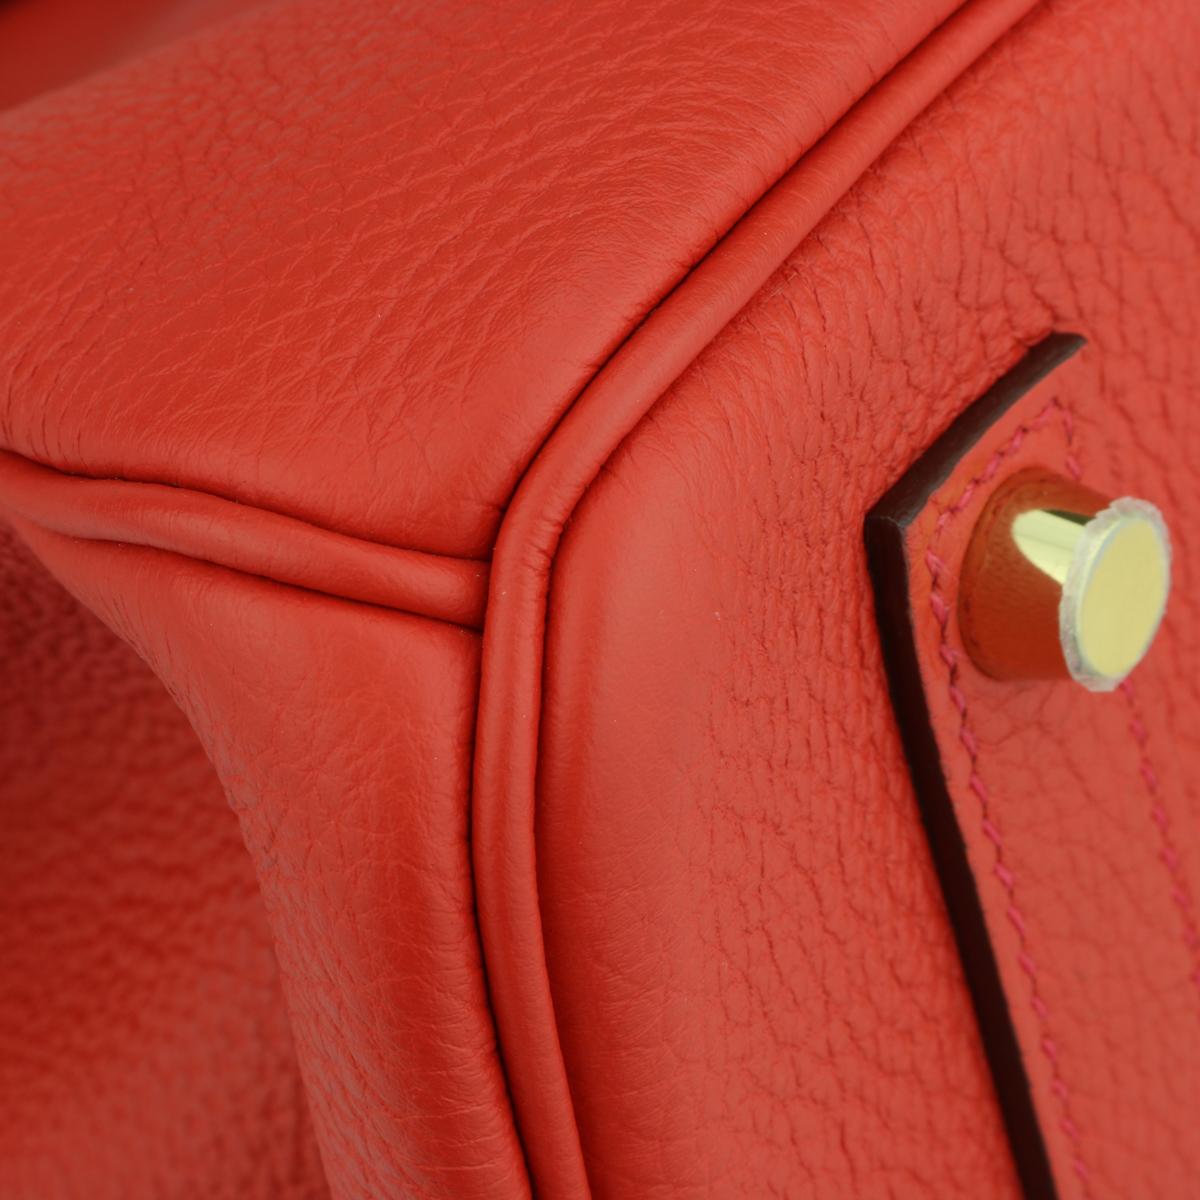 Hermès Birkin Bag 35cm Geranium Togo Leather with Gold Hardware Stamp A 2017 2